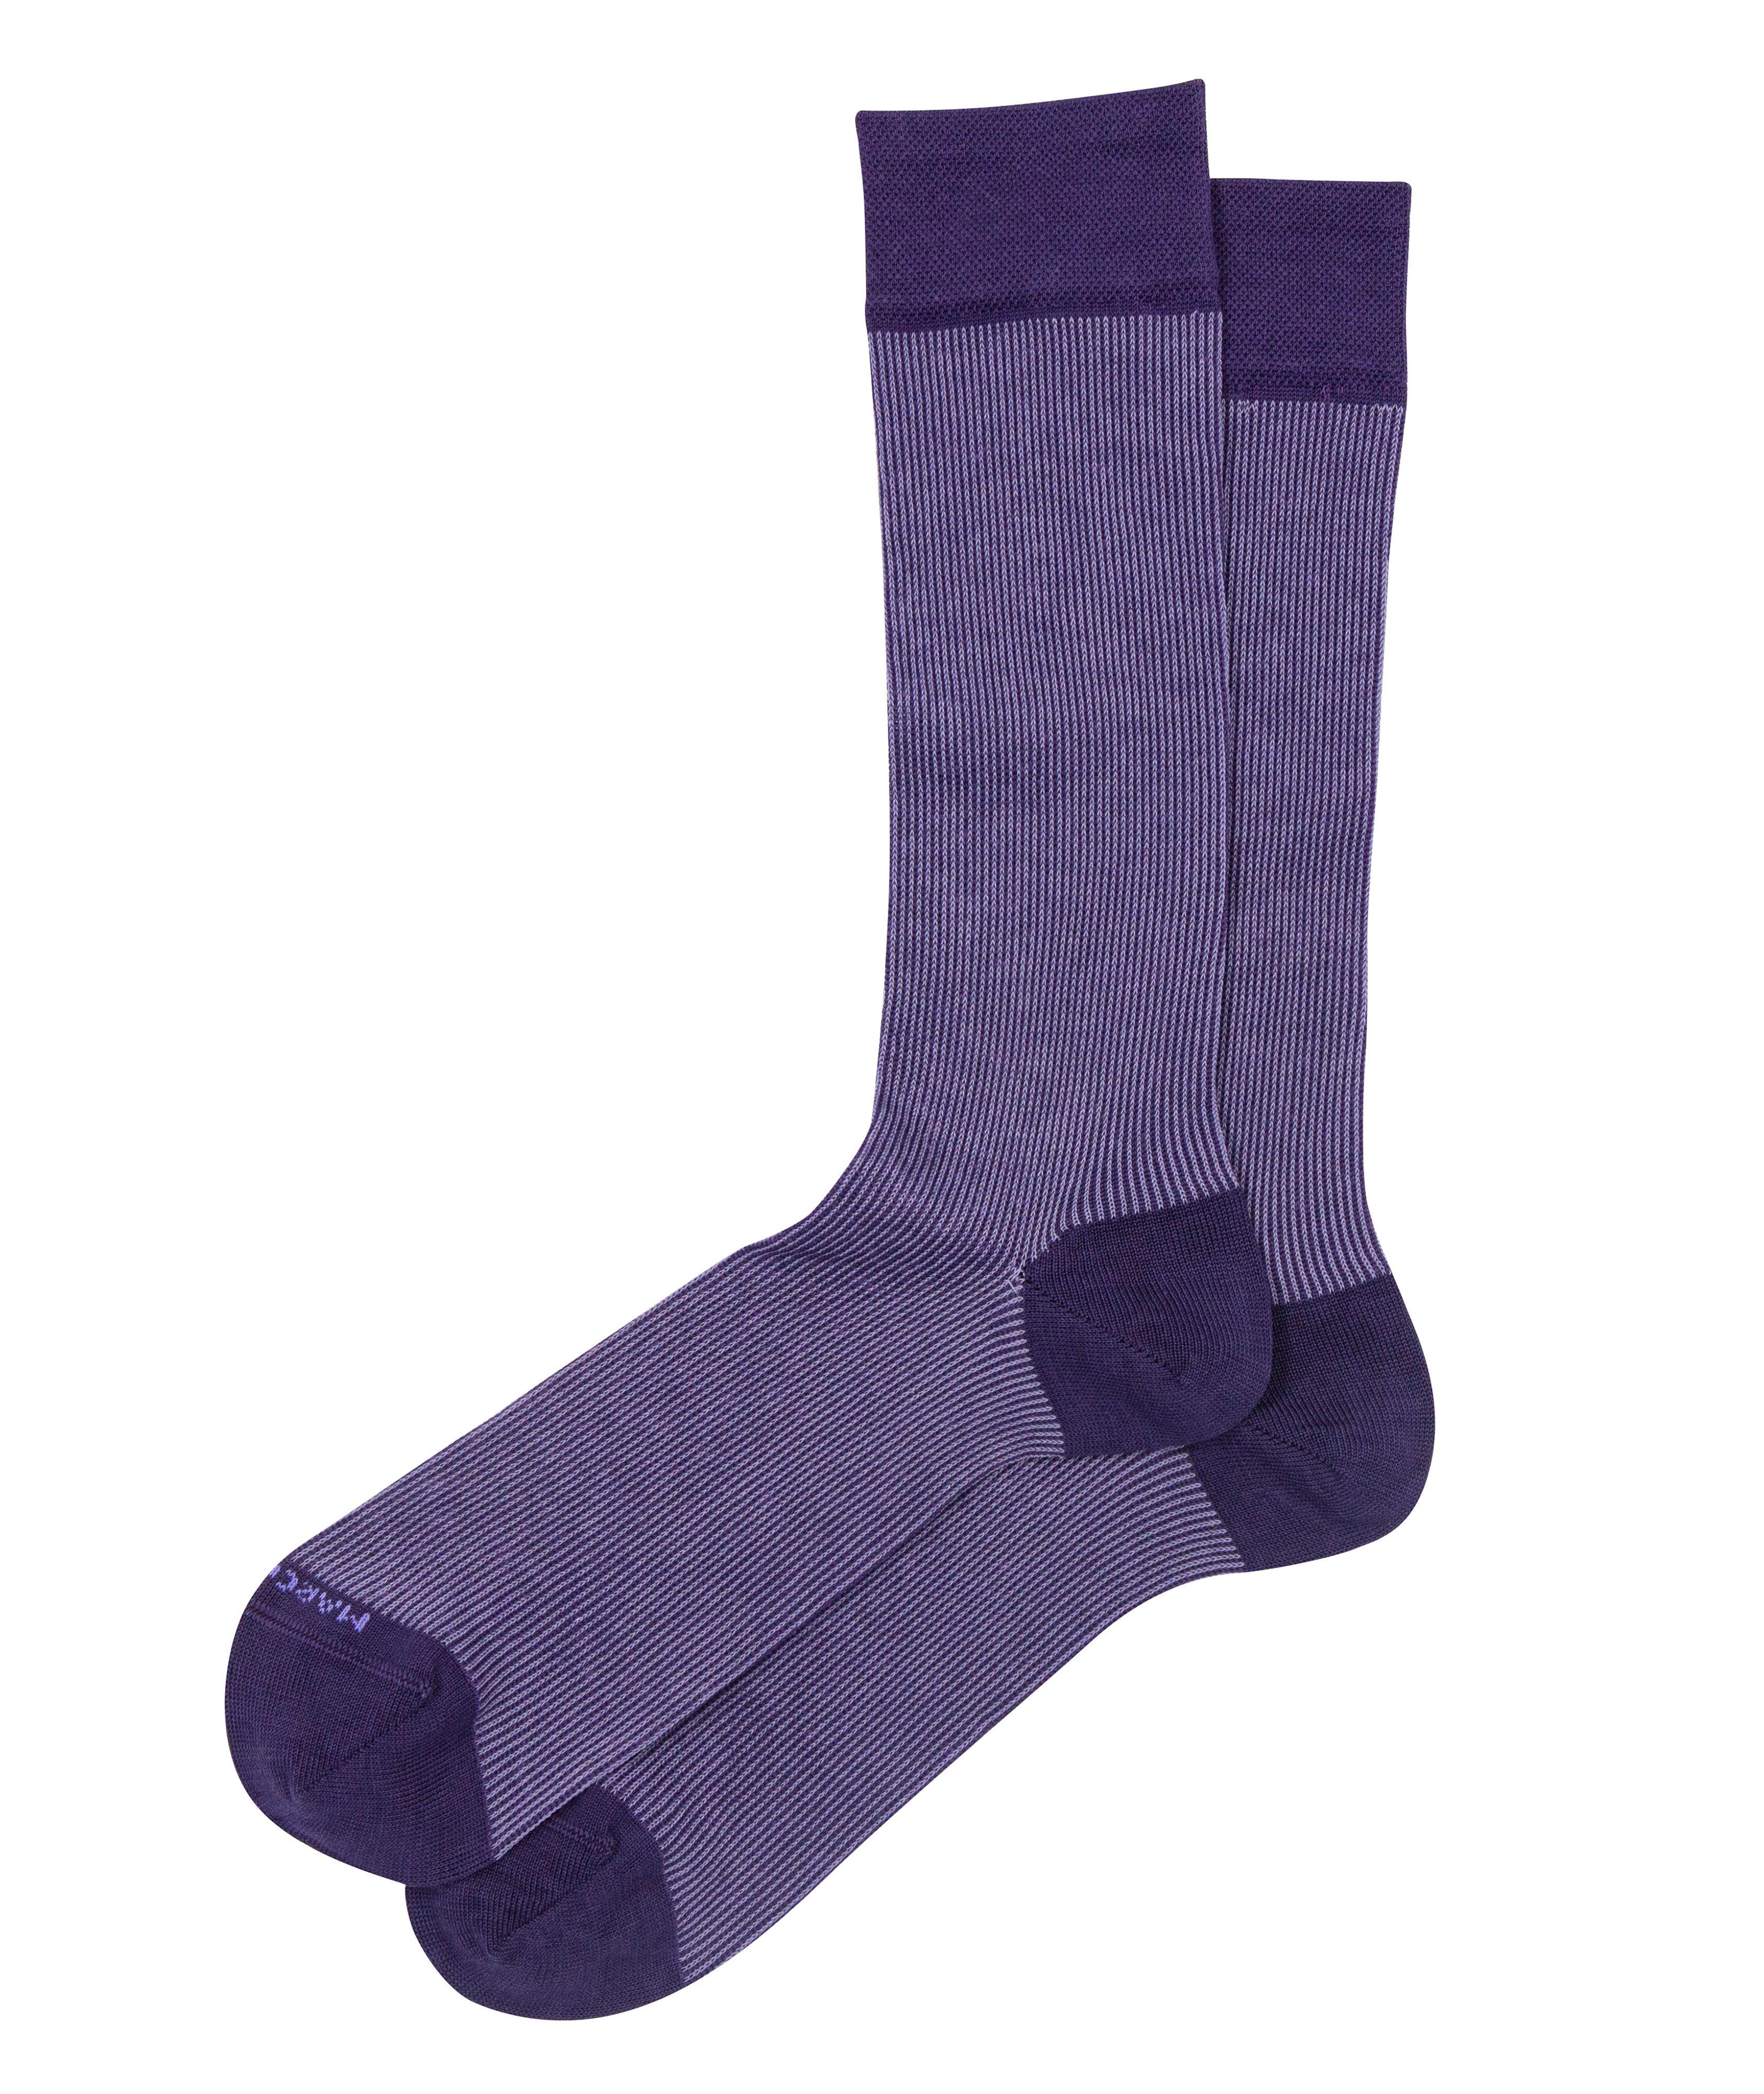 Stripe Cotton-Blend Socks image 0